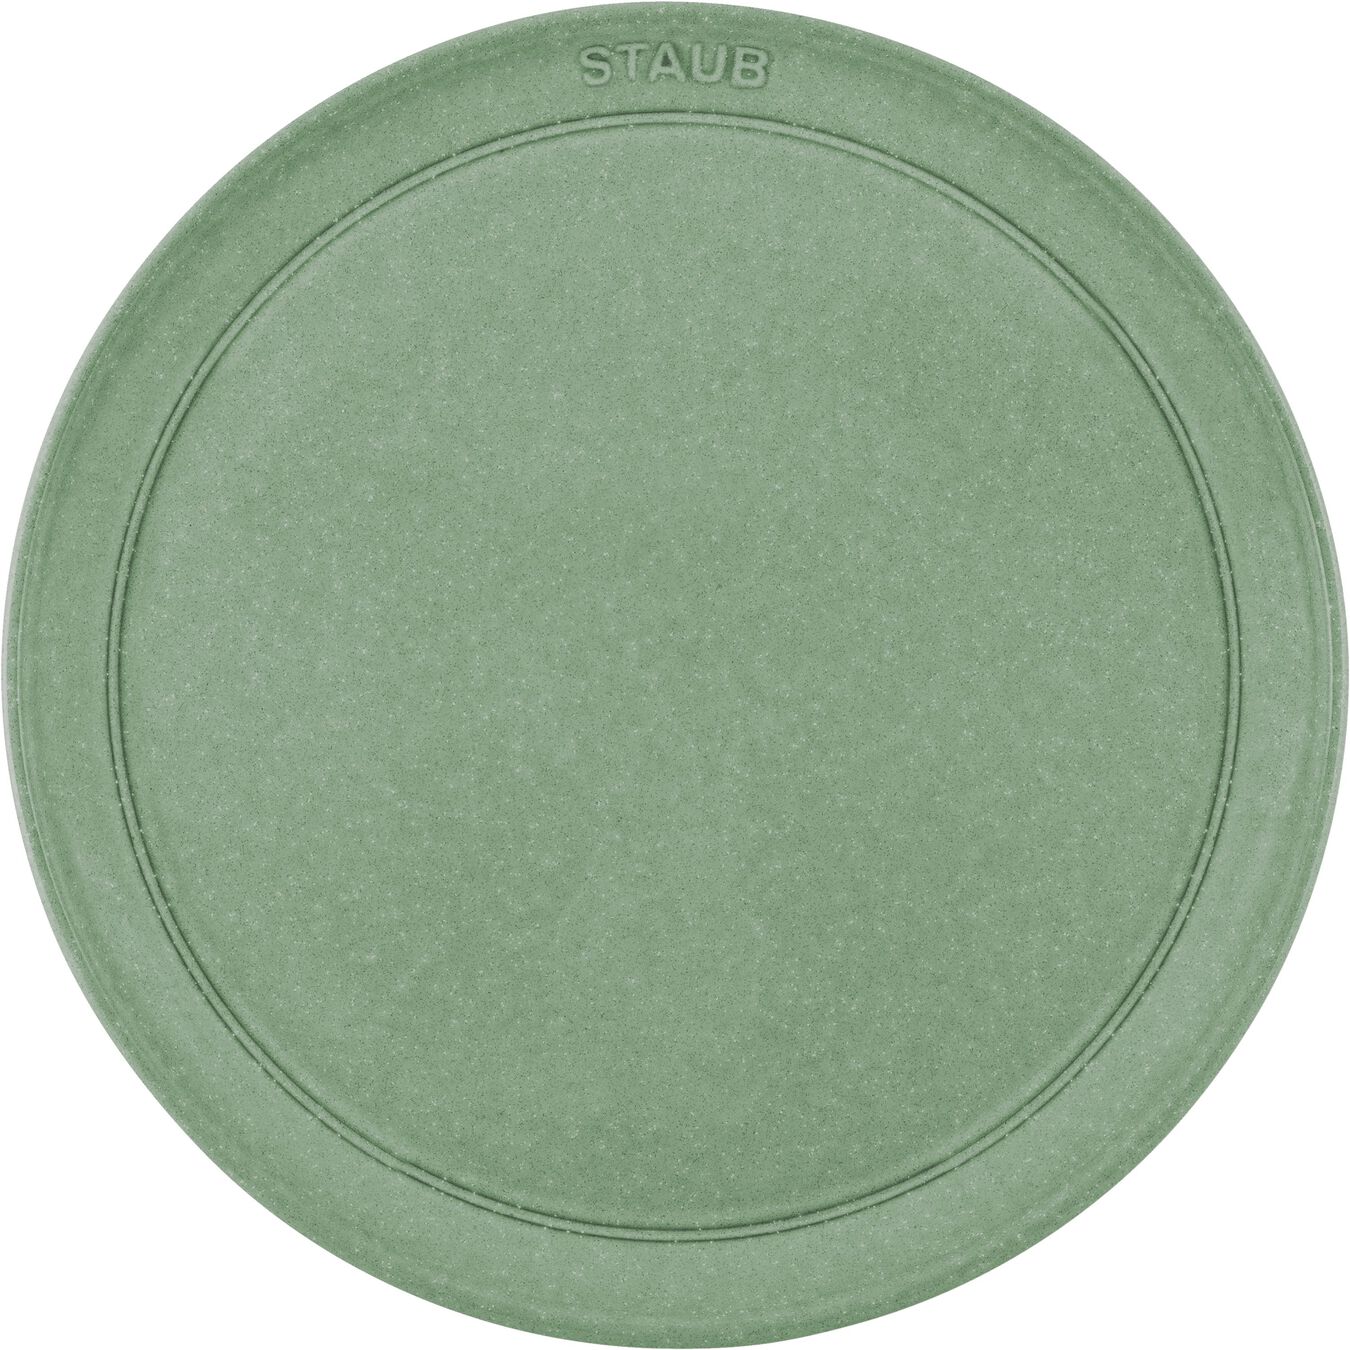 Prato plano 26 cm, Cerâmica, Verde seco,,large 2